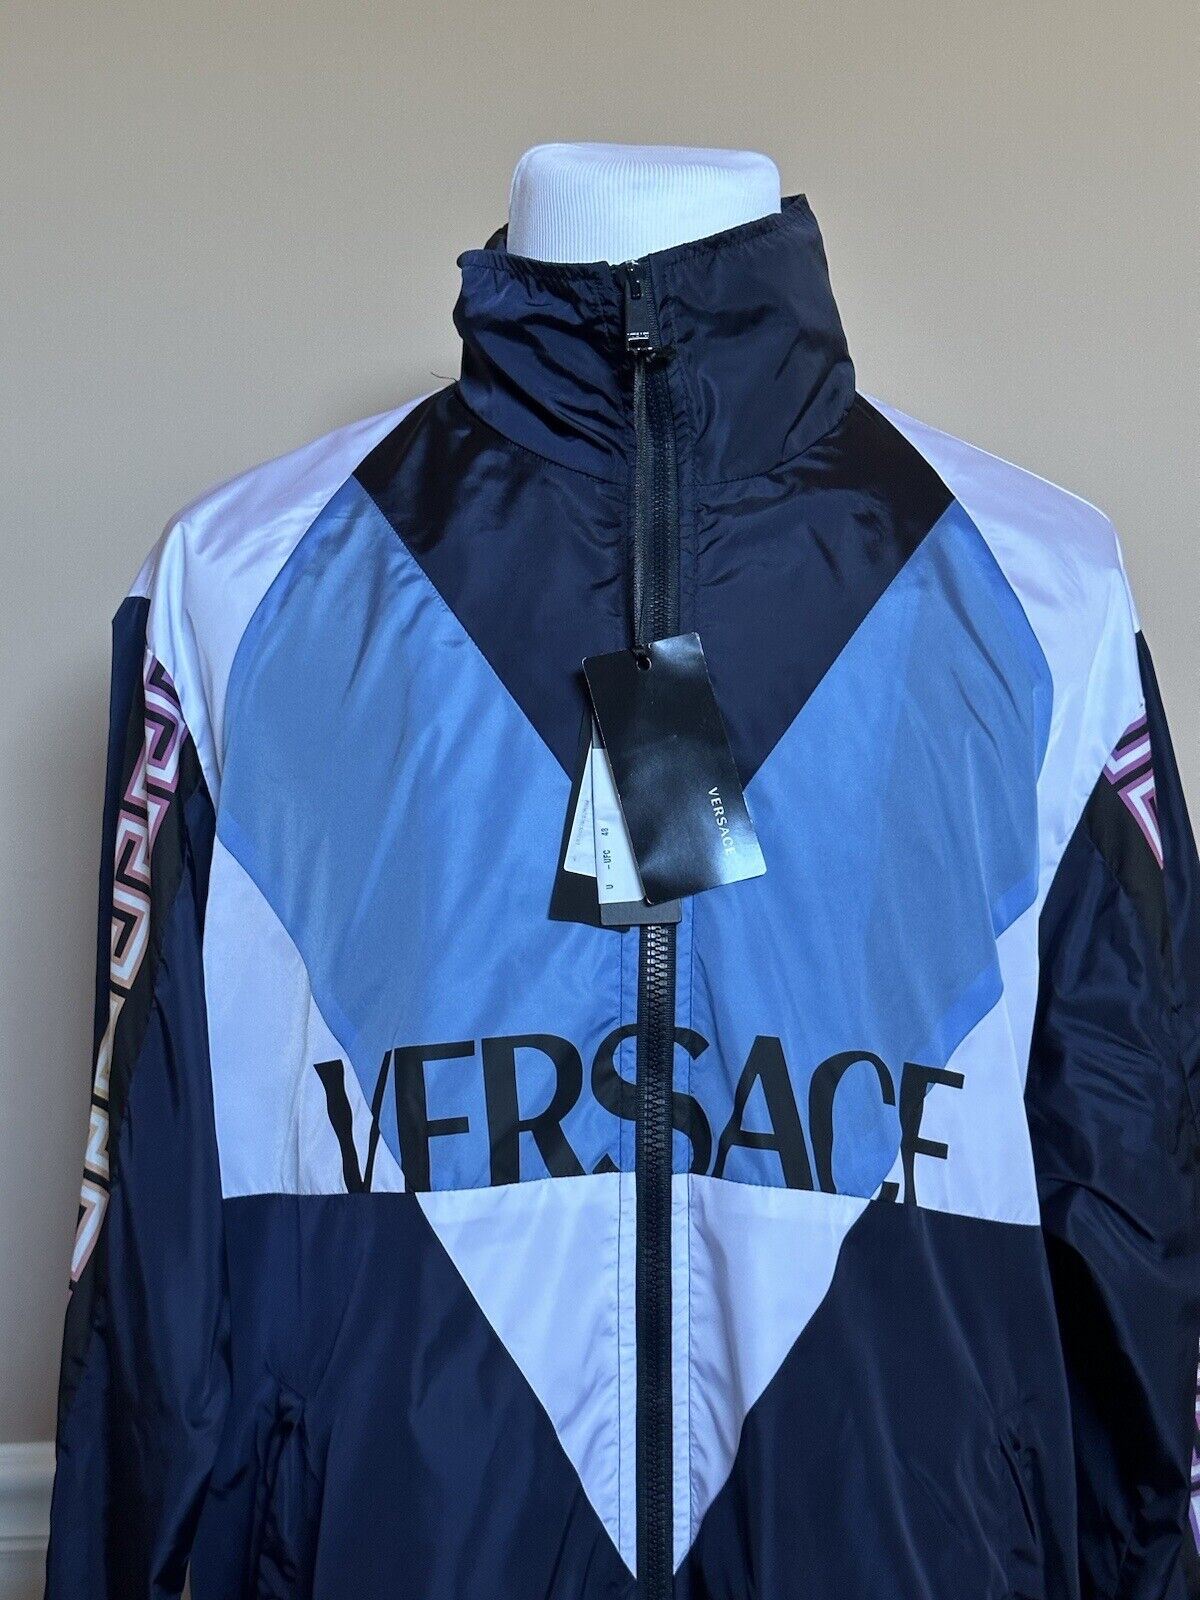 Neu mit Etikett: 1295 $ Versace Herren Nylonjacke Windjacke Blau 48 (M – Übergröße) 1001030 